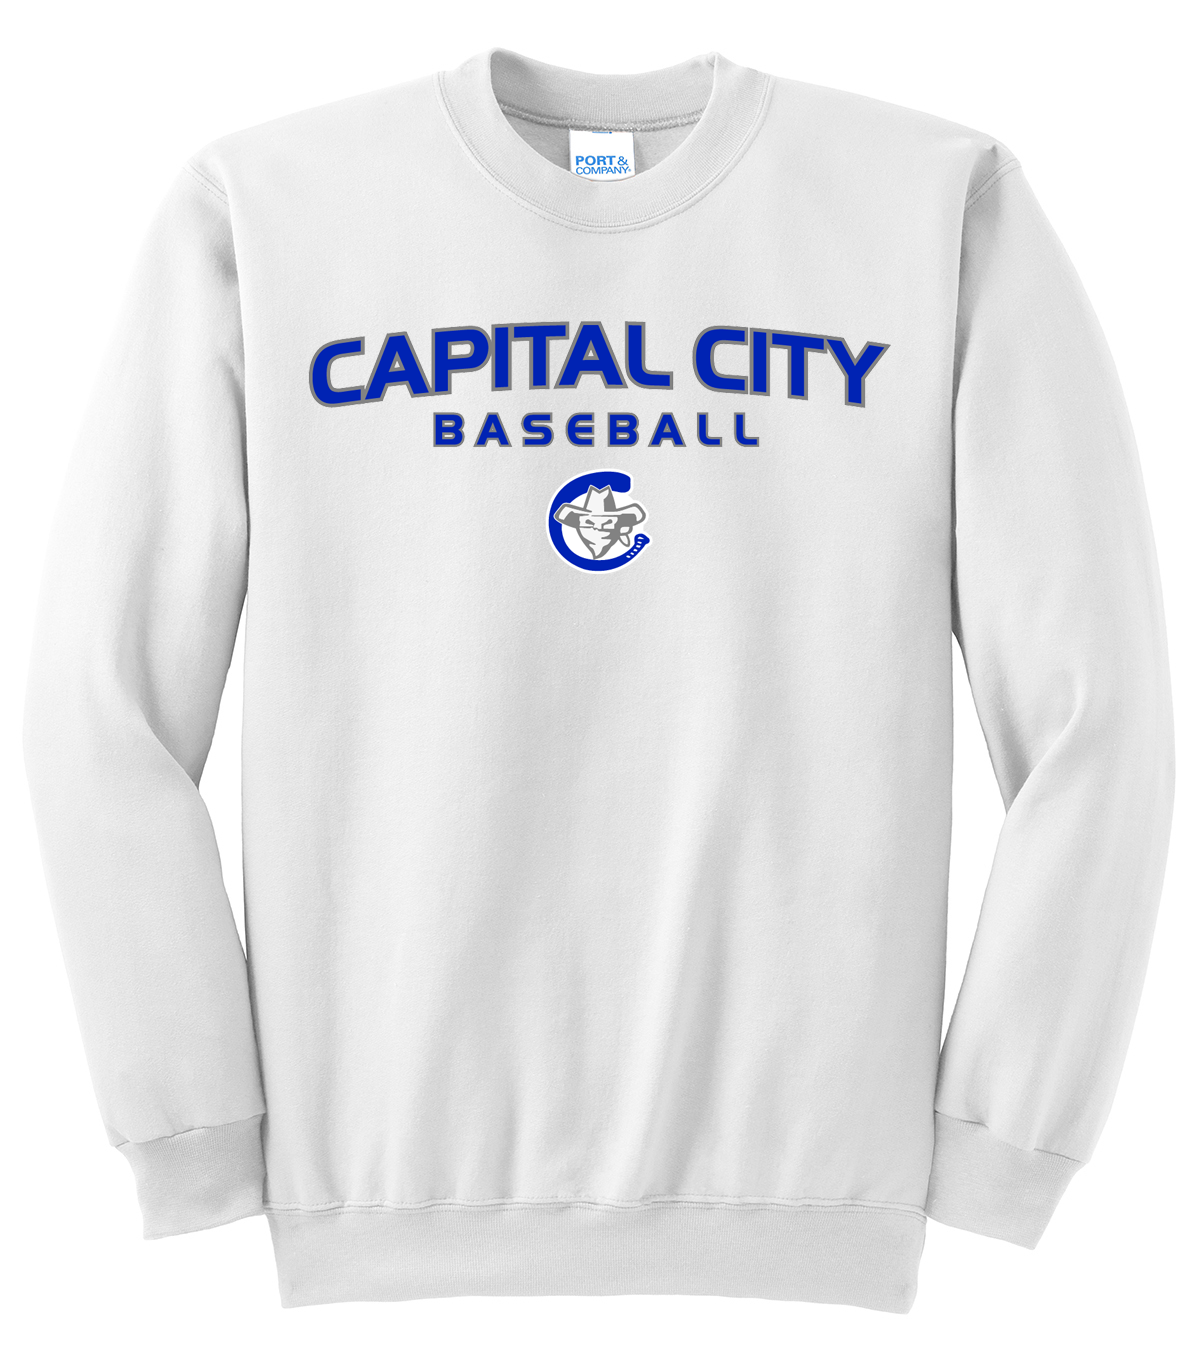 Capital City Baseball Crew Neck Sweater